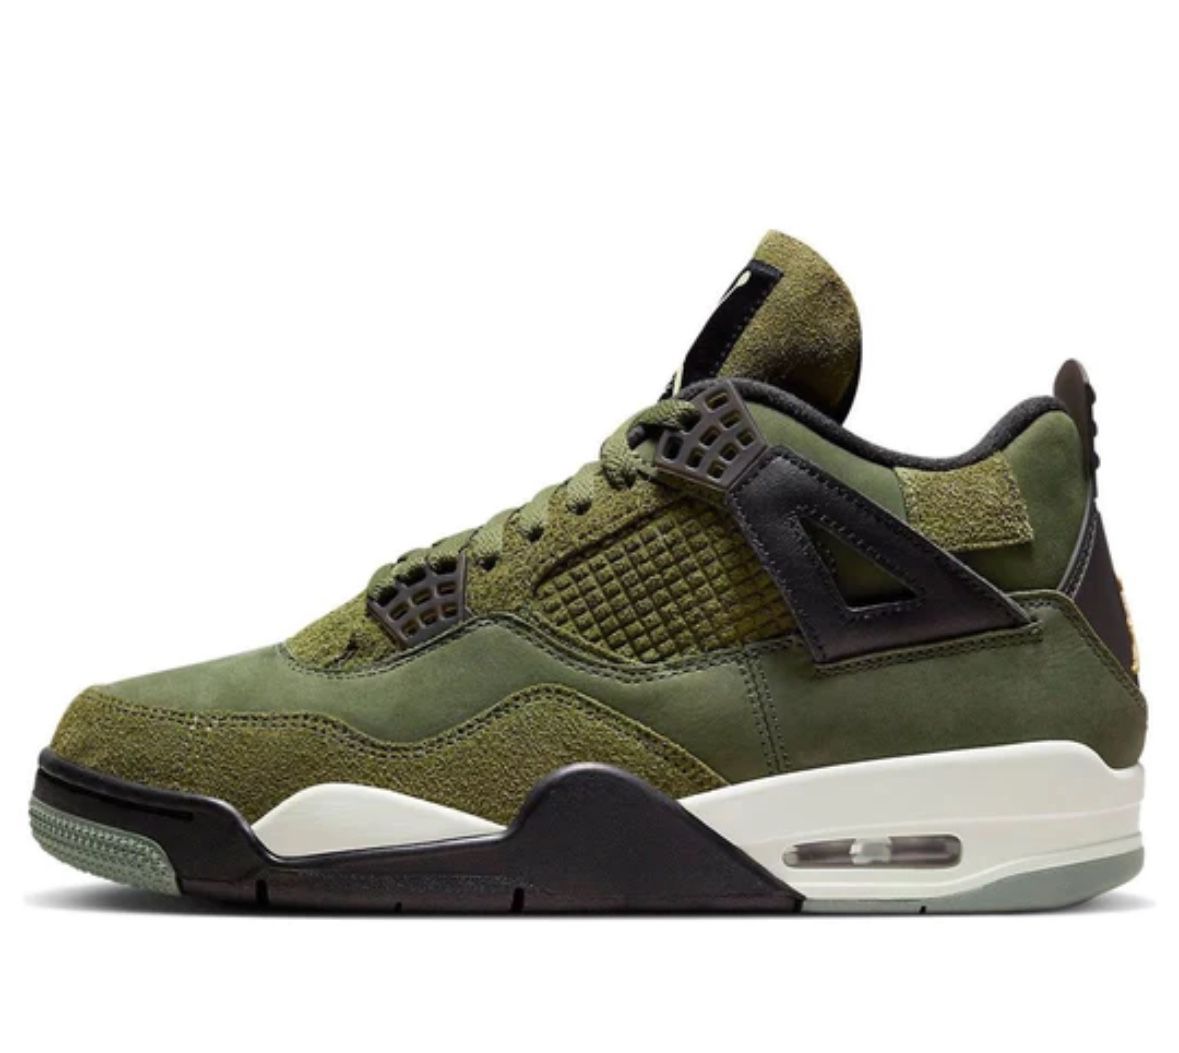 Like New Air Jordan 4 Retro SE Craft Olive Green Sneakers